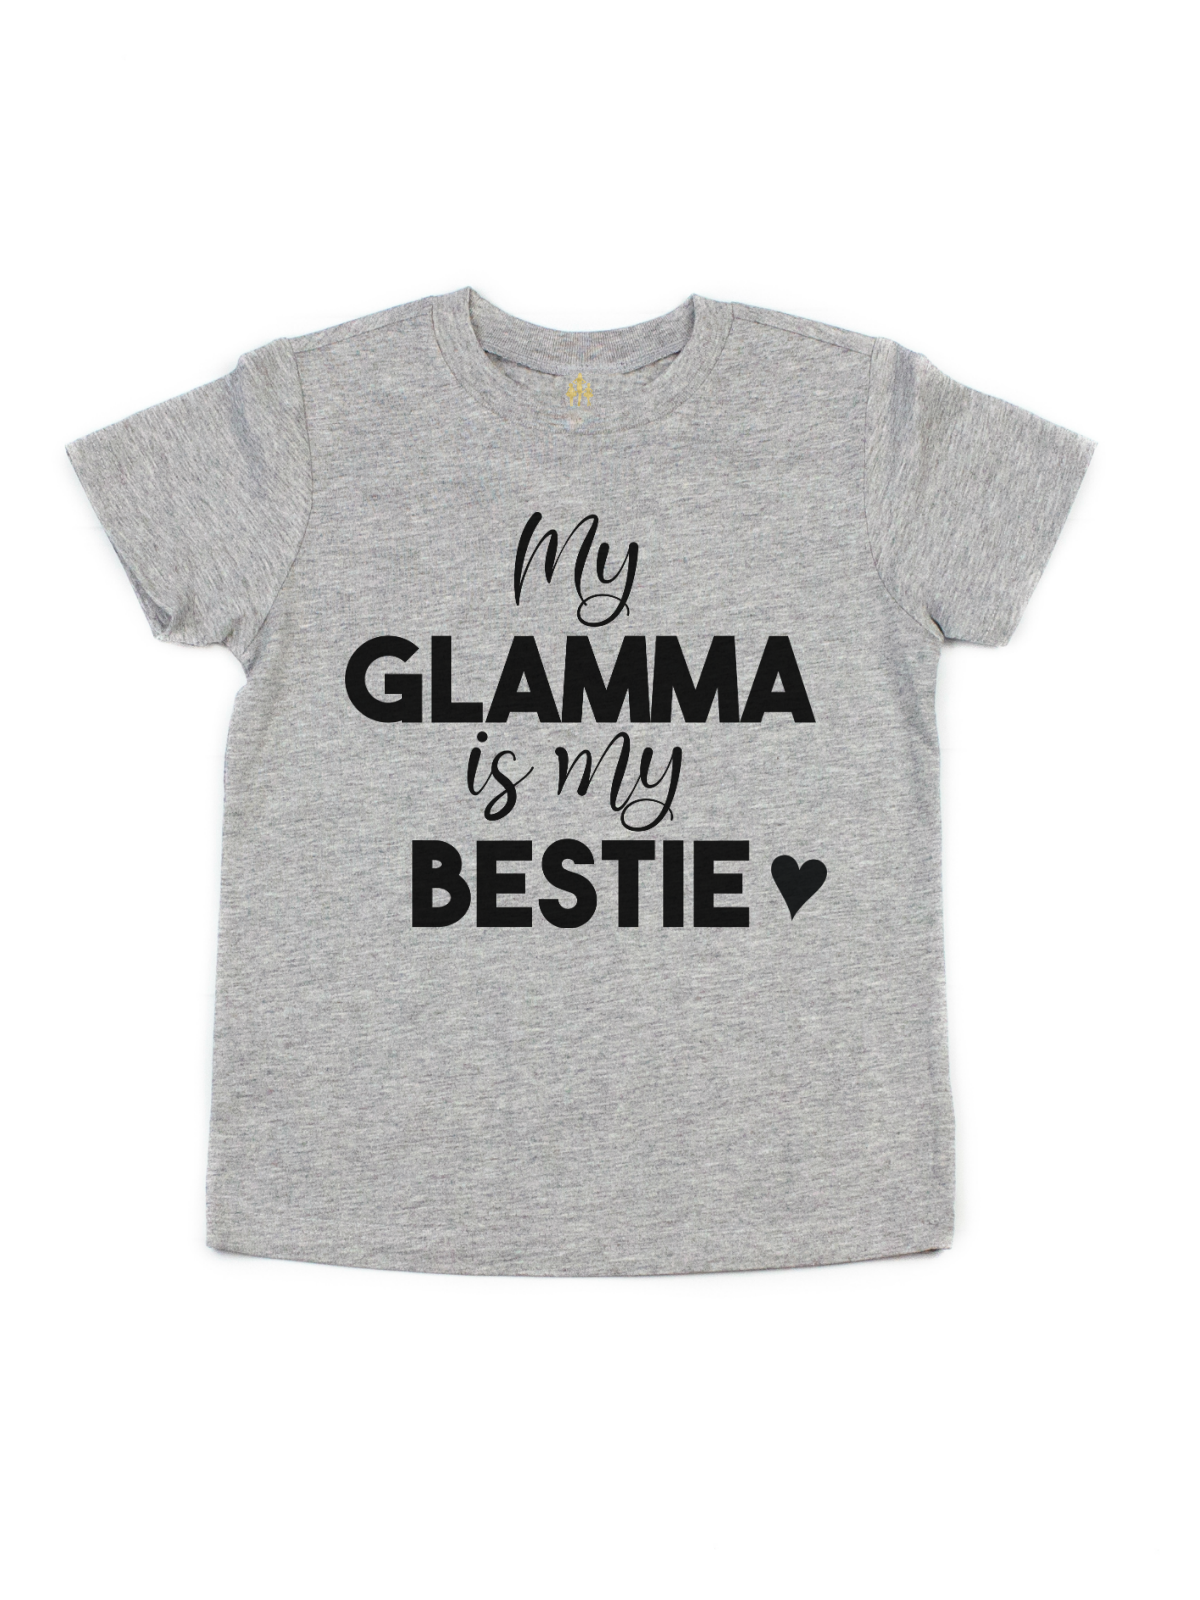 My Glam Daughter is My Bestie and My Glamma is my Bestie Matching Tops